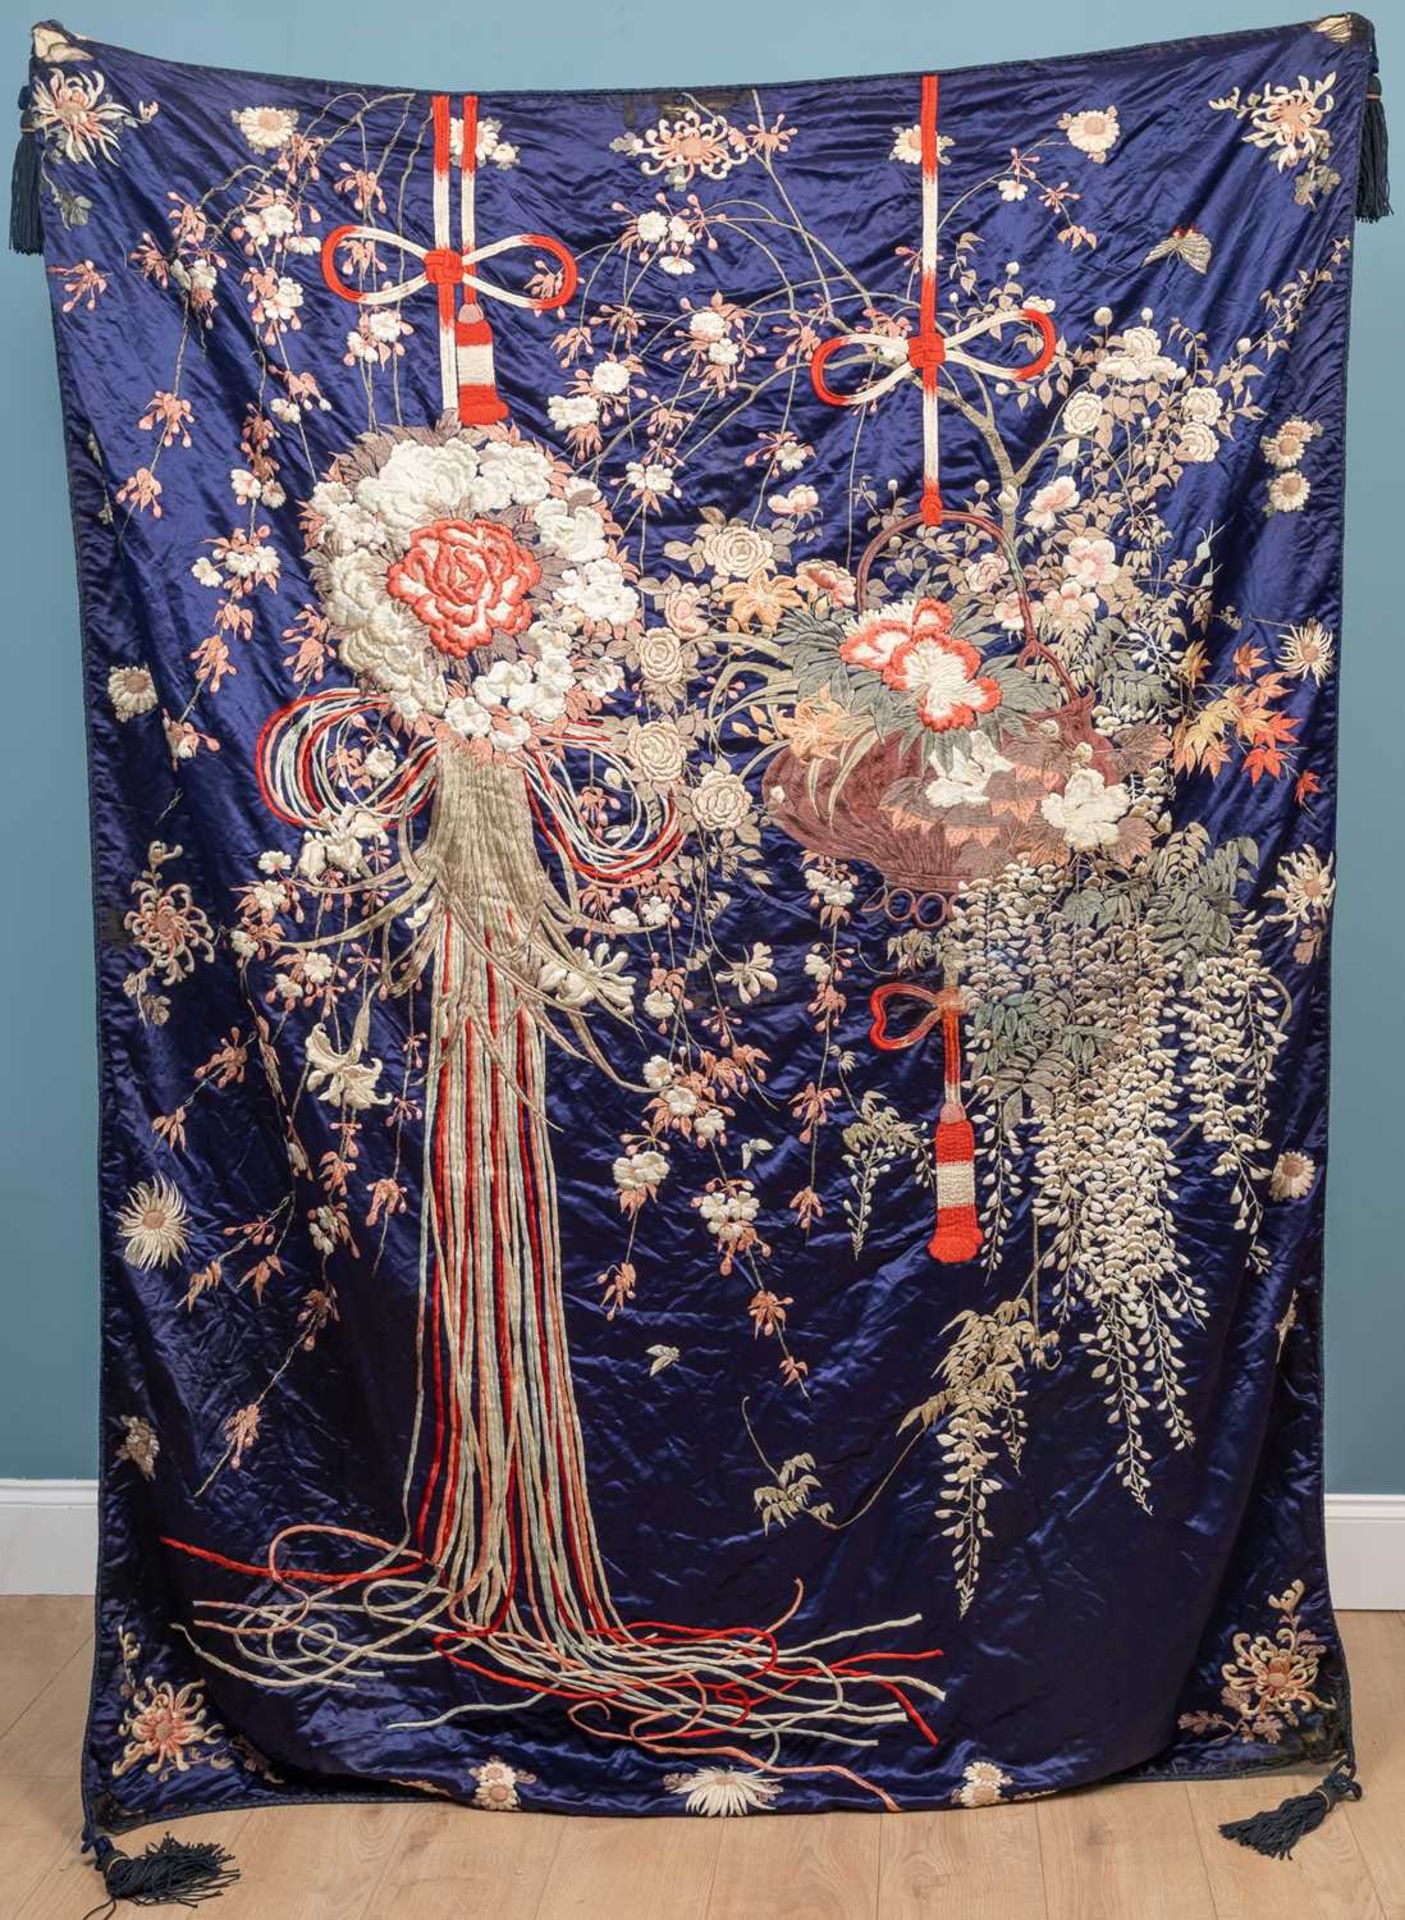 A decorative Japanese dark blue ground silk panel or hanging